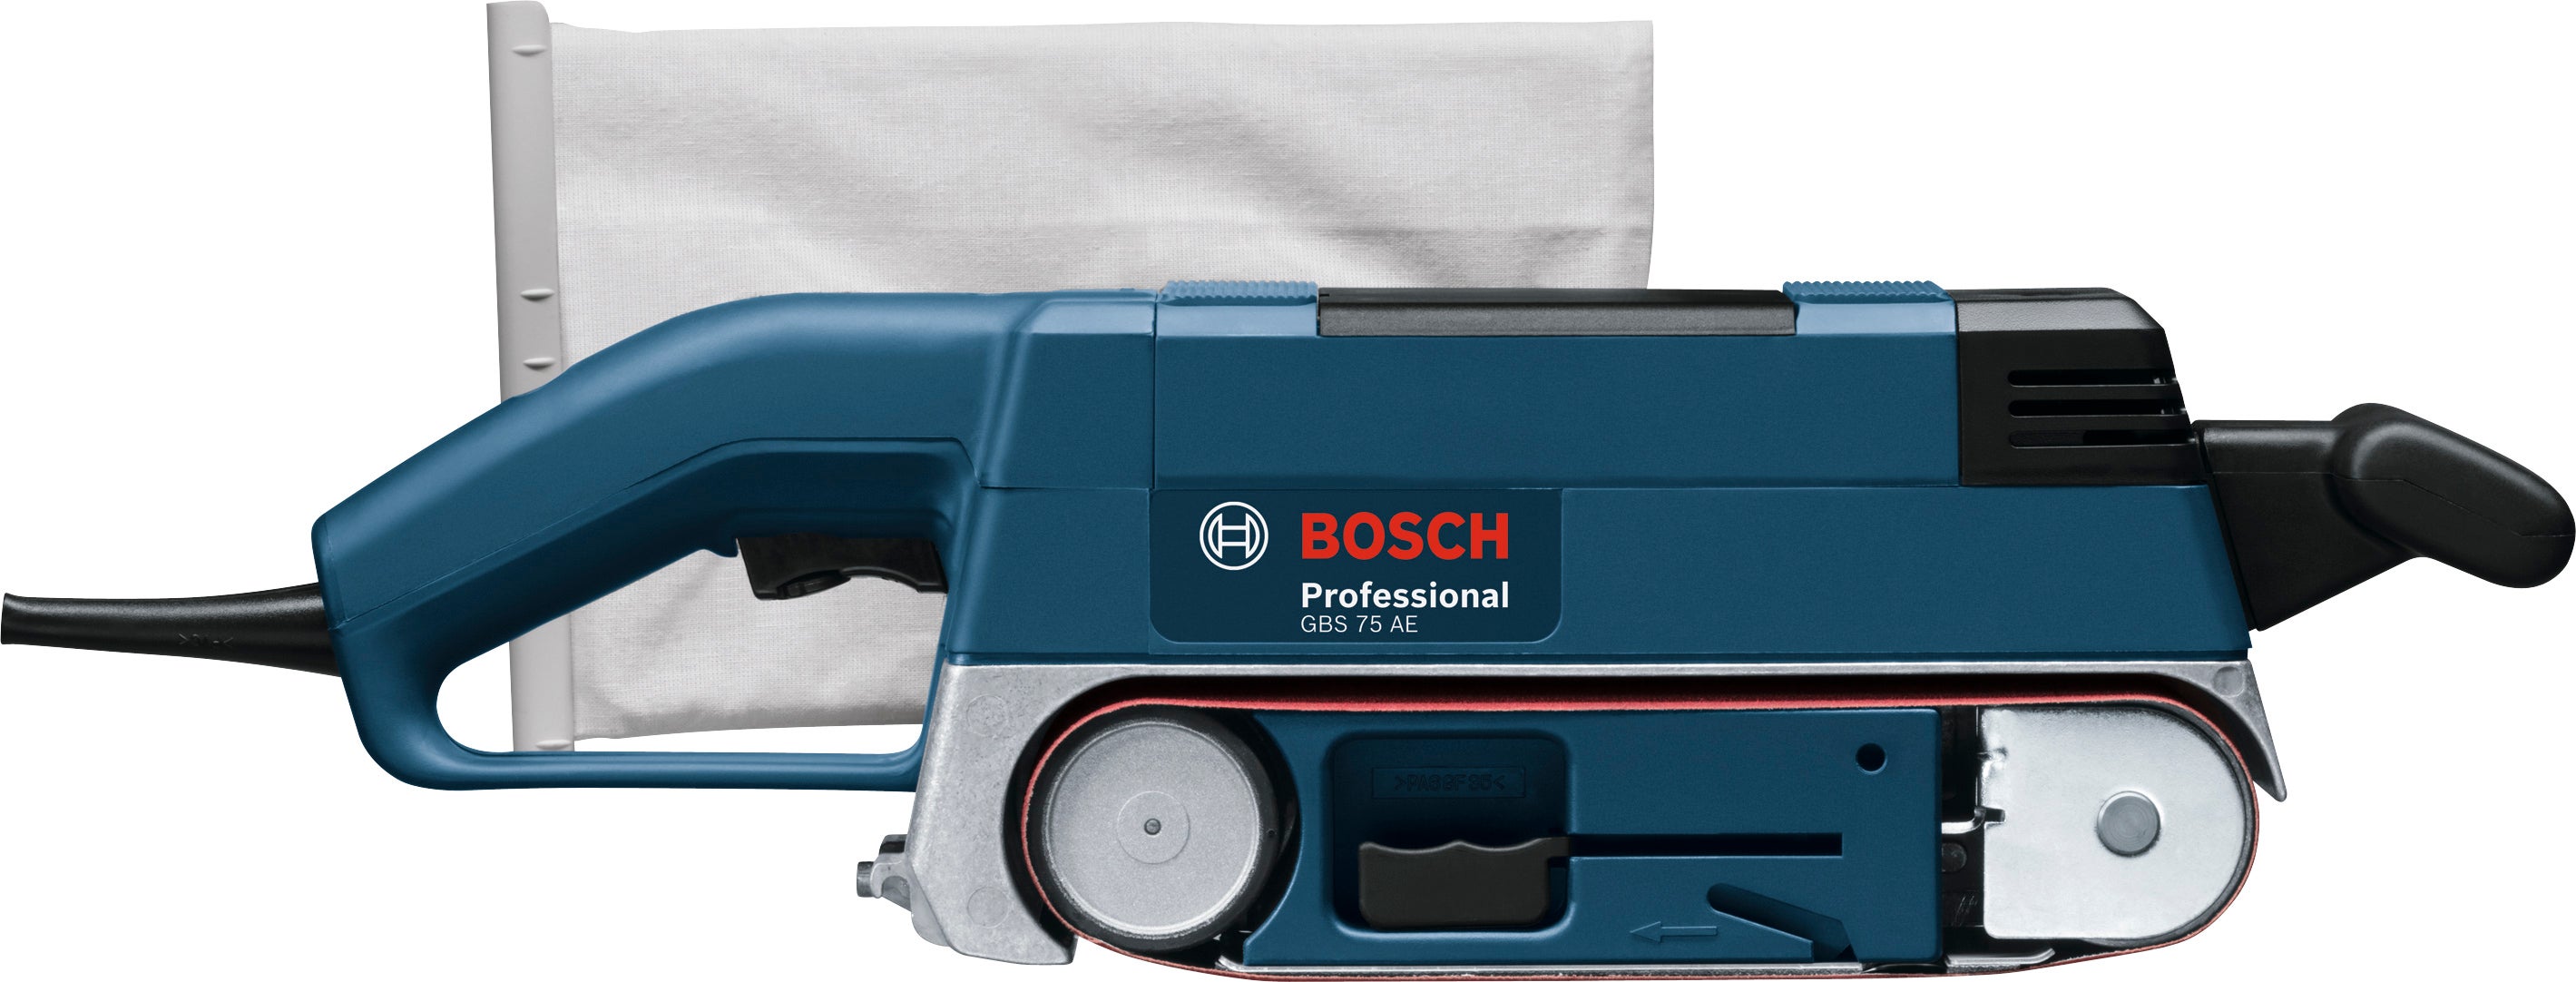 Bosch Professional Ponceuse à Bande GBS 75 AE 0601274707 Bleu : :  Bricolage